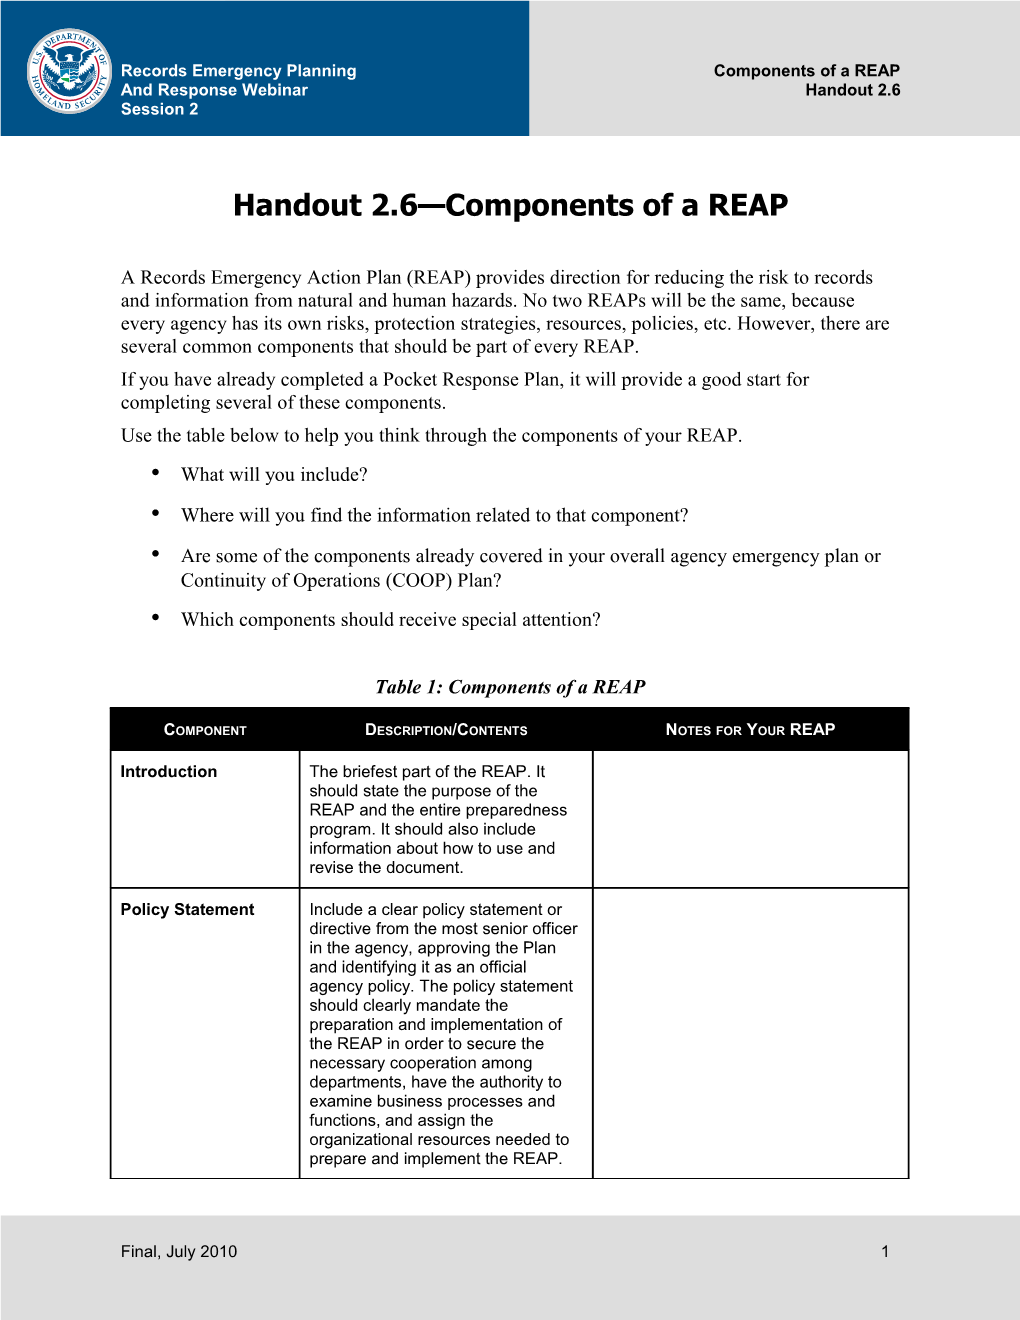 Handout 2.6: Components of a REAP